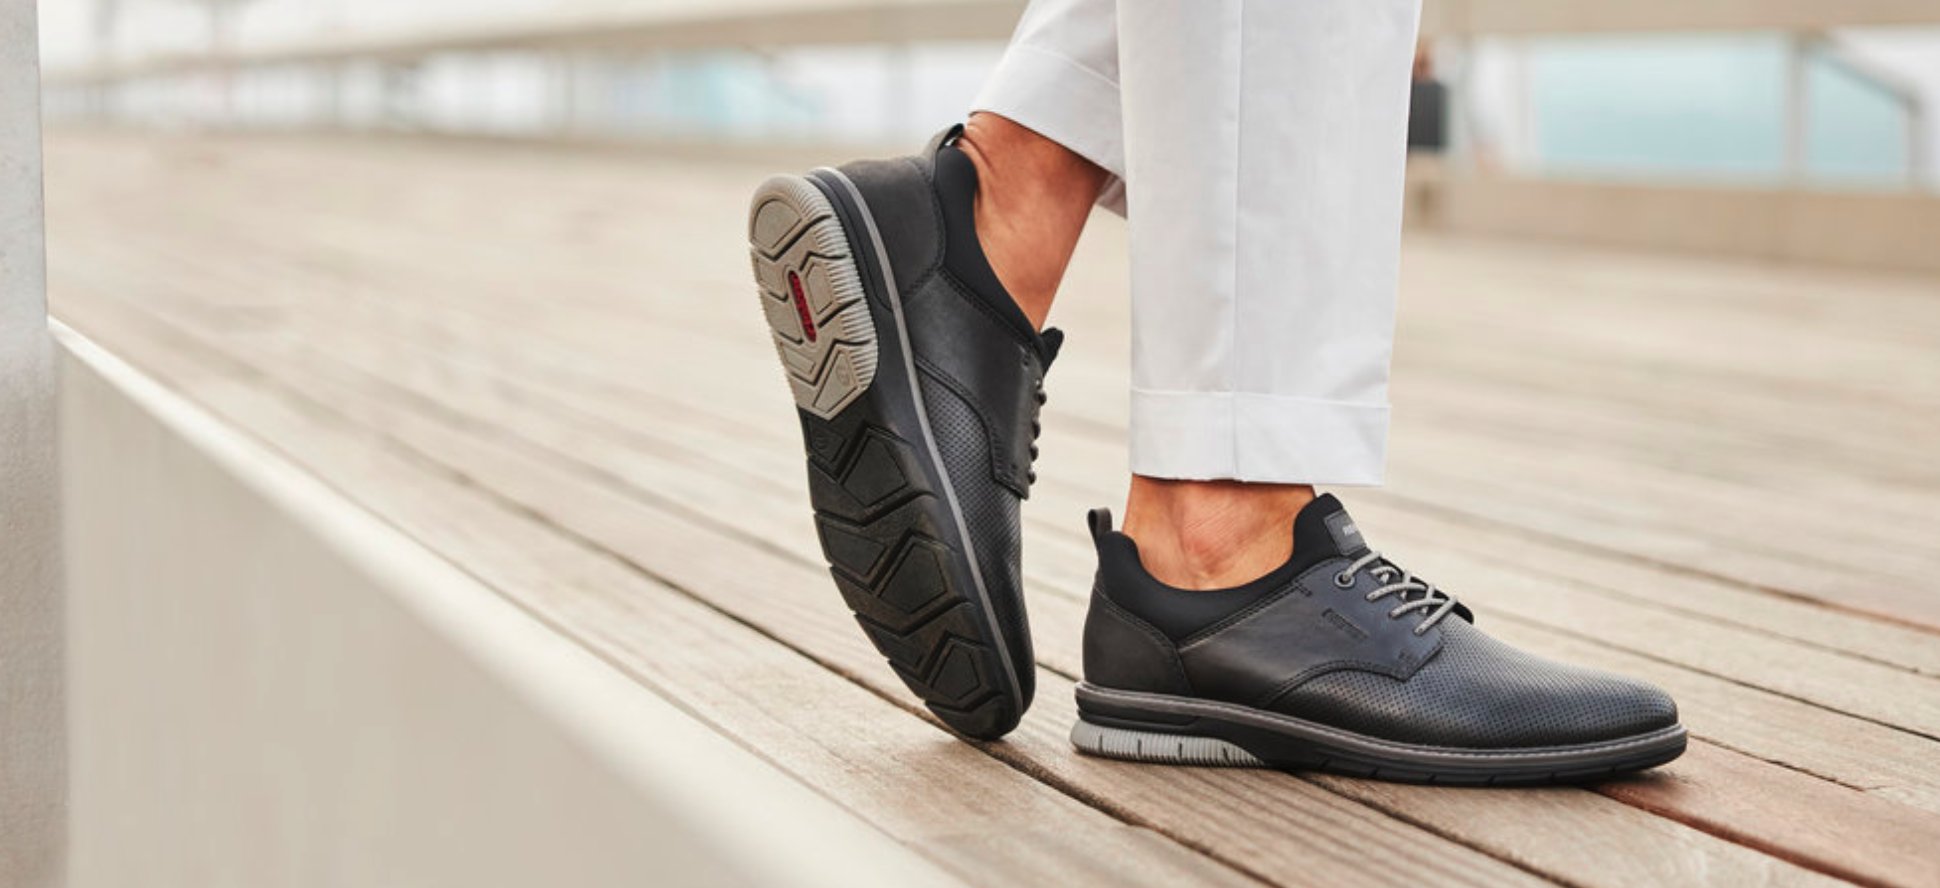 kylling strop lol Shoes For Men - Comfort Footwear & Quality | Zagros Shoes